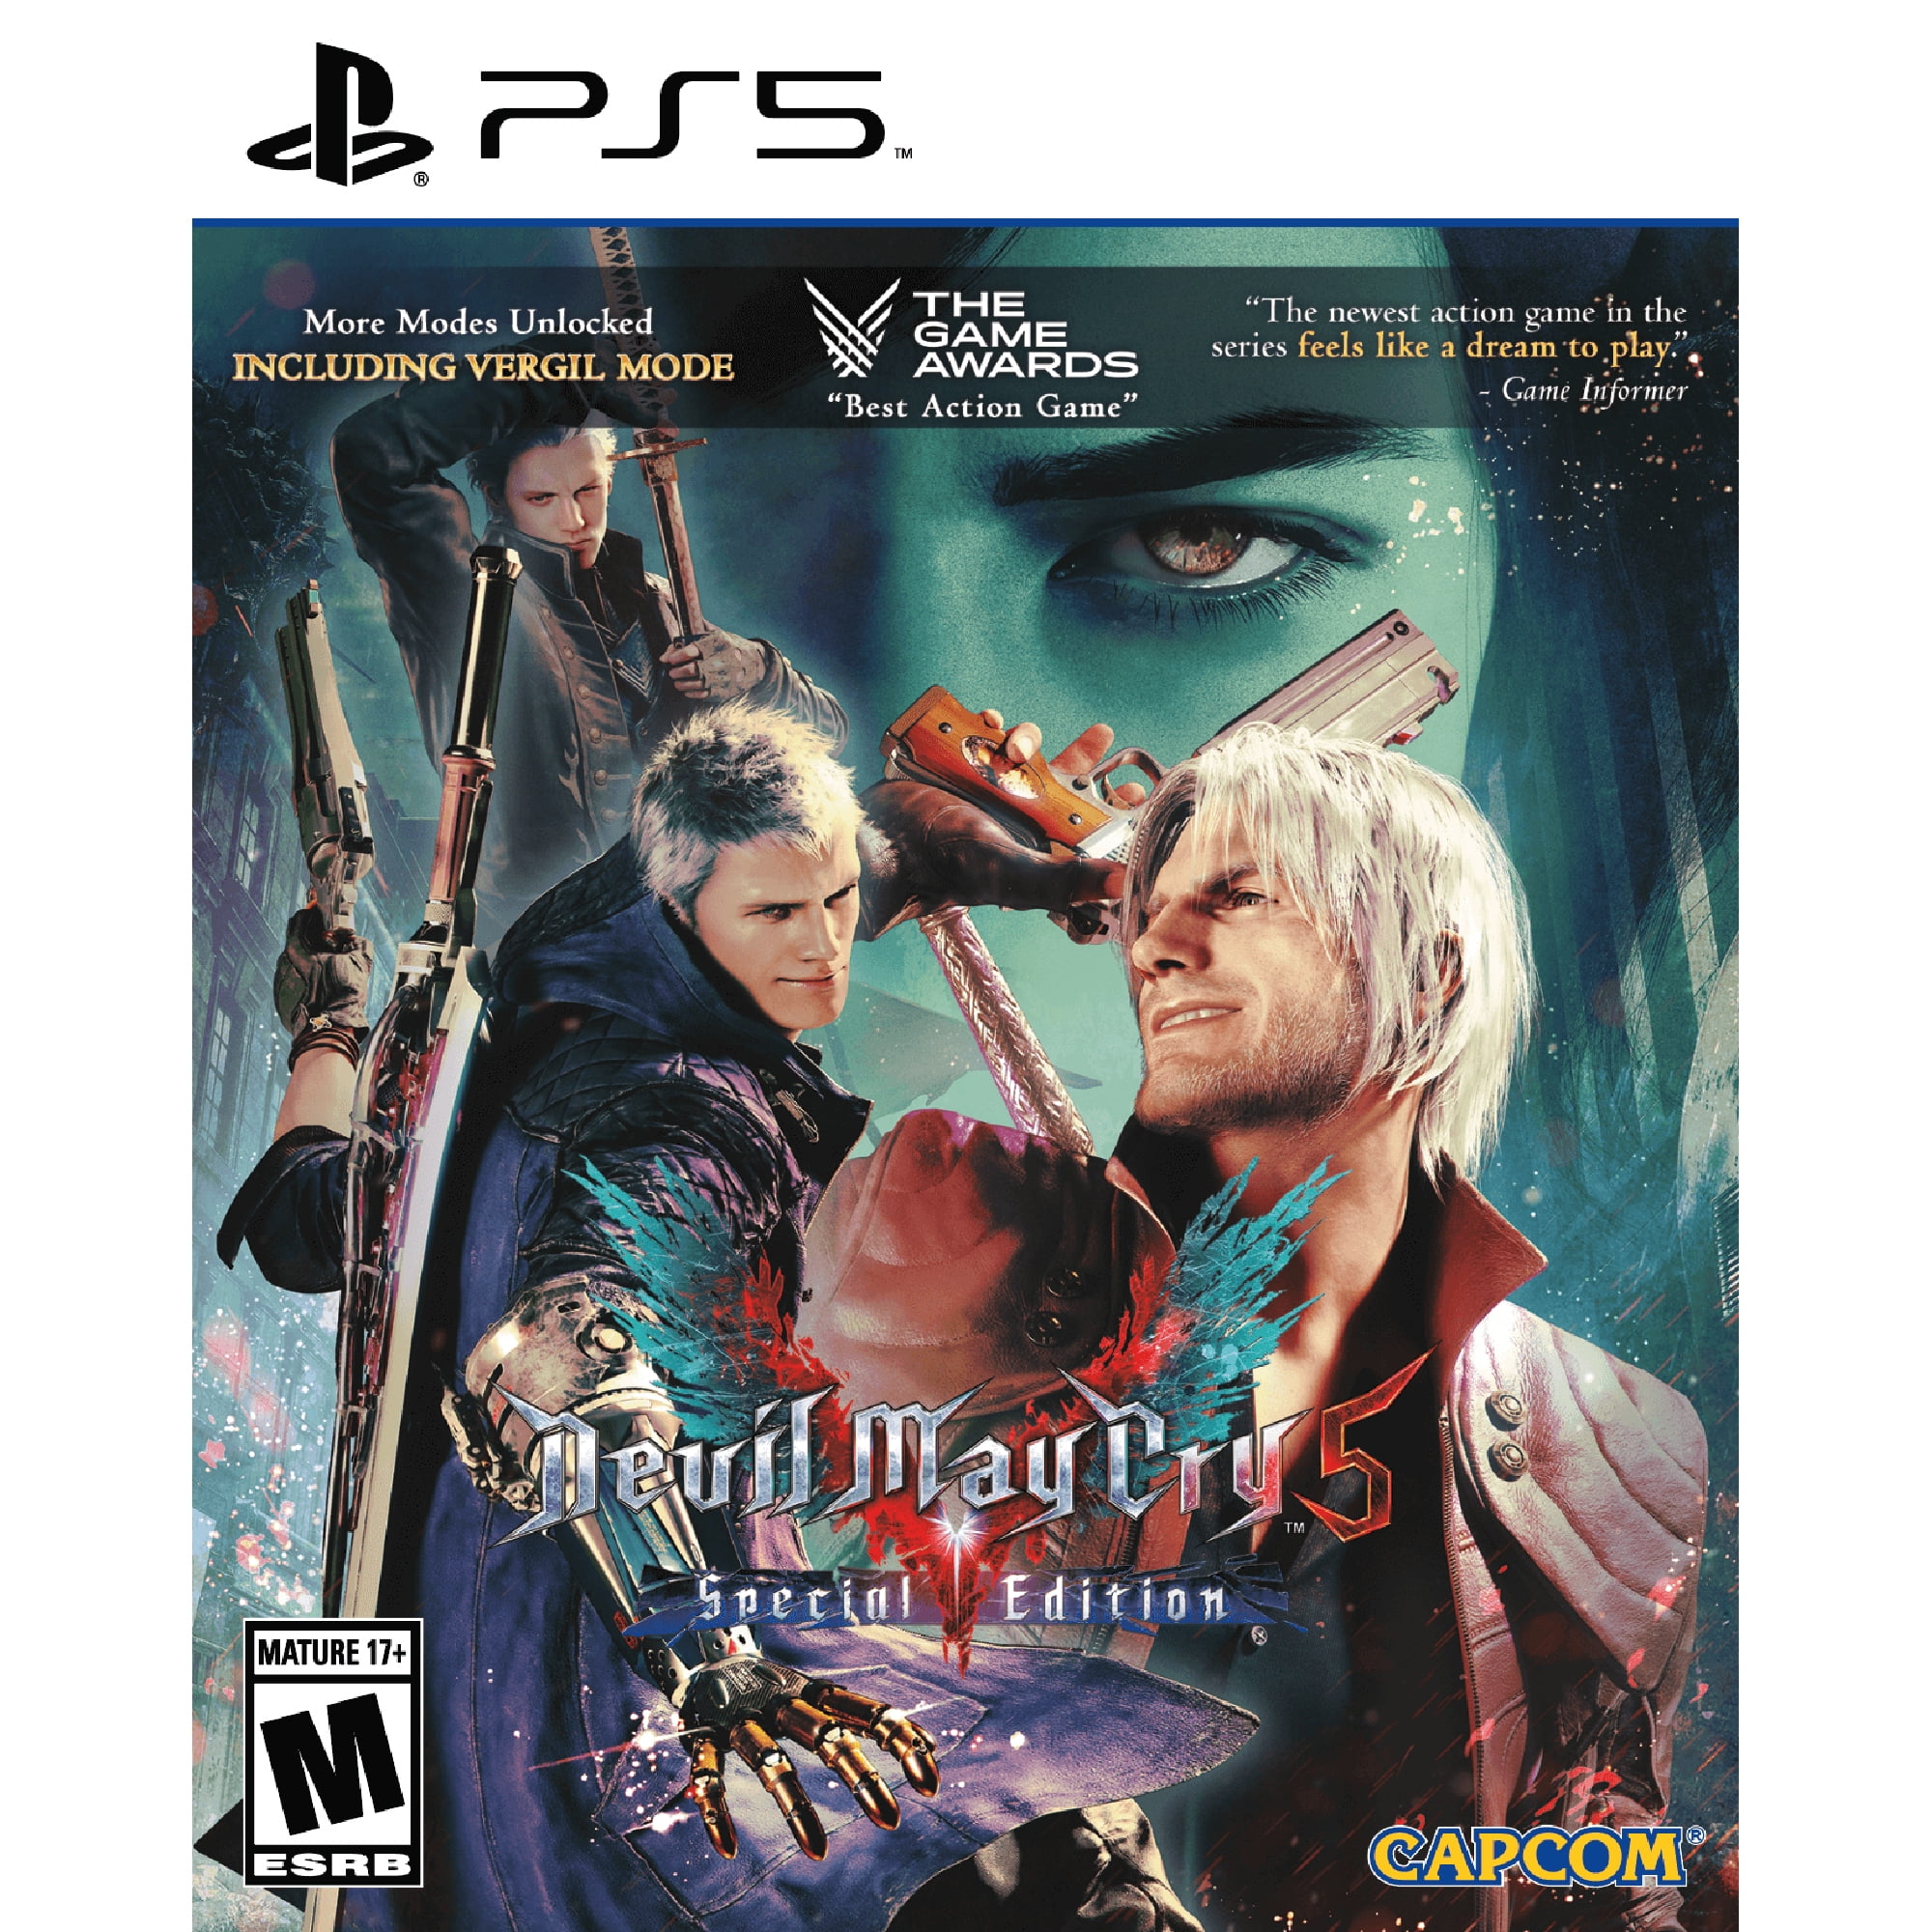 Devil May Cry 5 Special Edition, Capcom, PlayStation 5